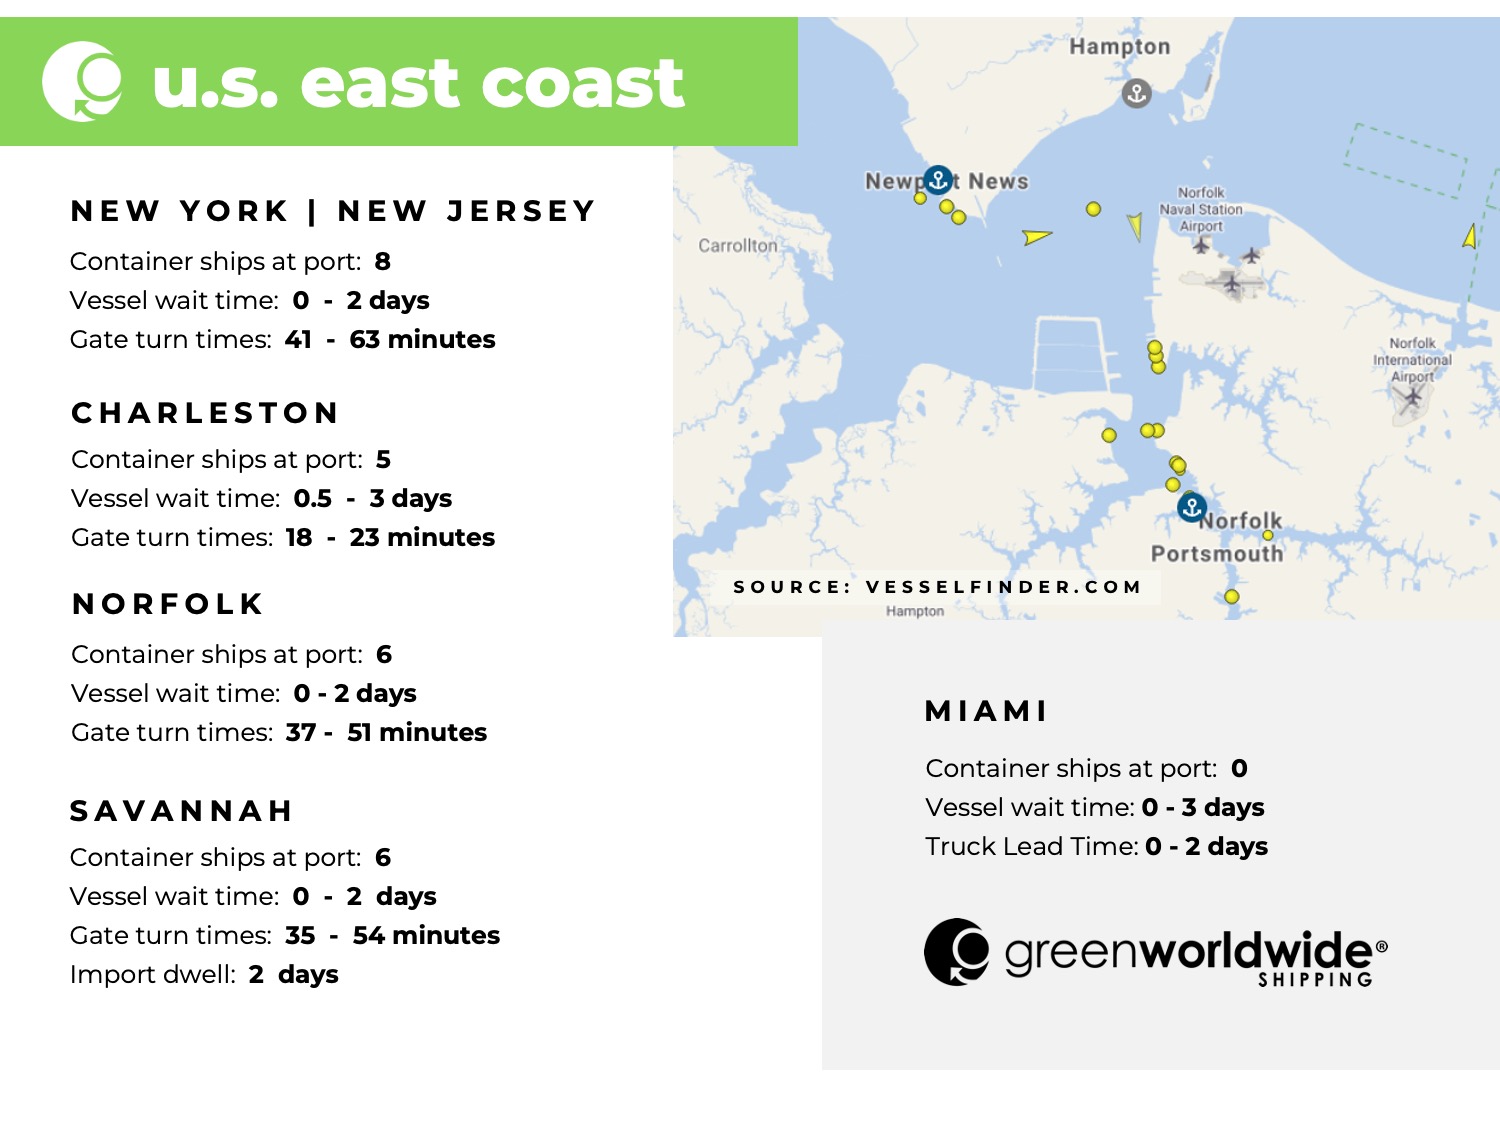 U.S. East Coast, freight market update, norfolk, new york, savannah, miami